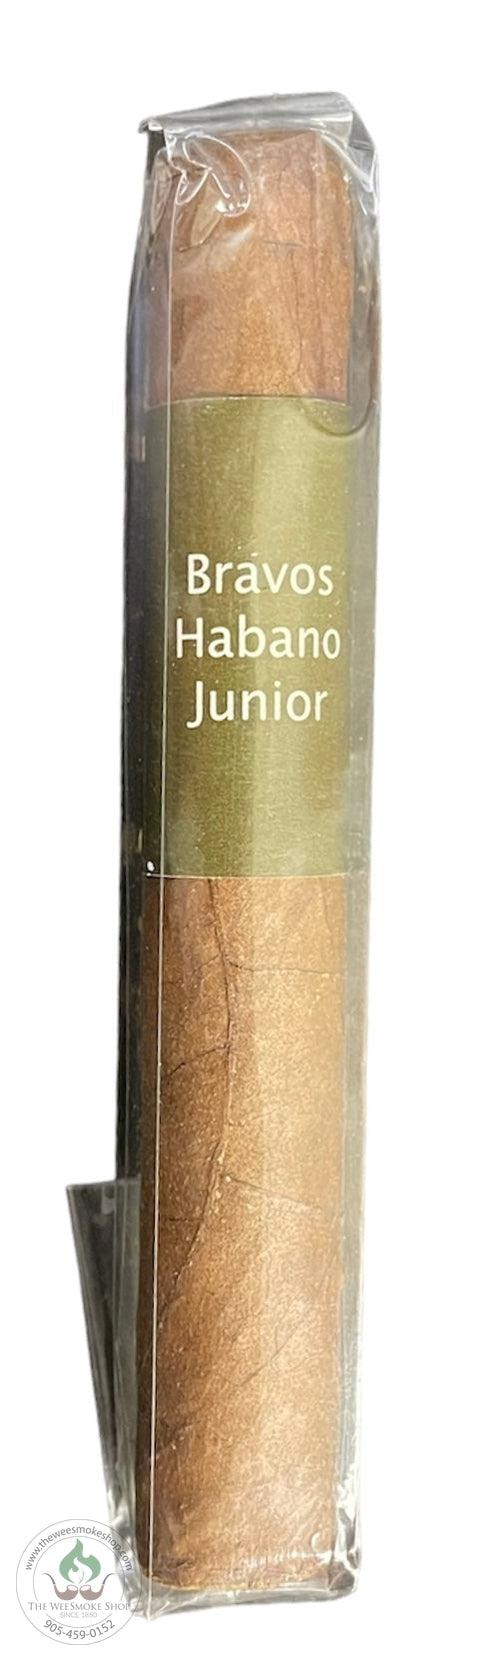 Bravos - Habano Junior - The Wee Smoke Shop